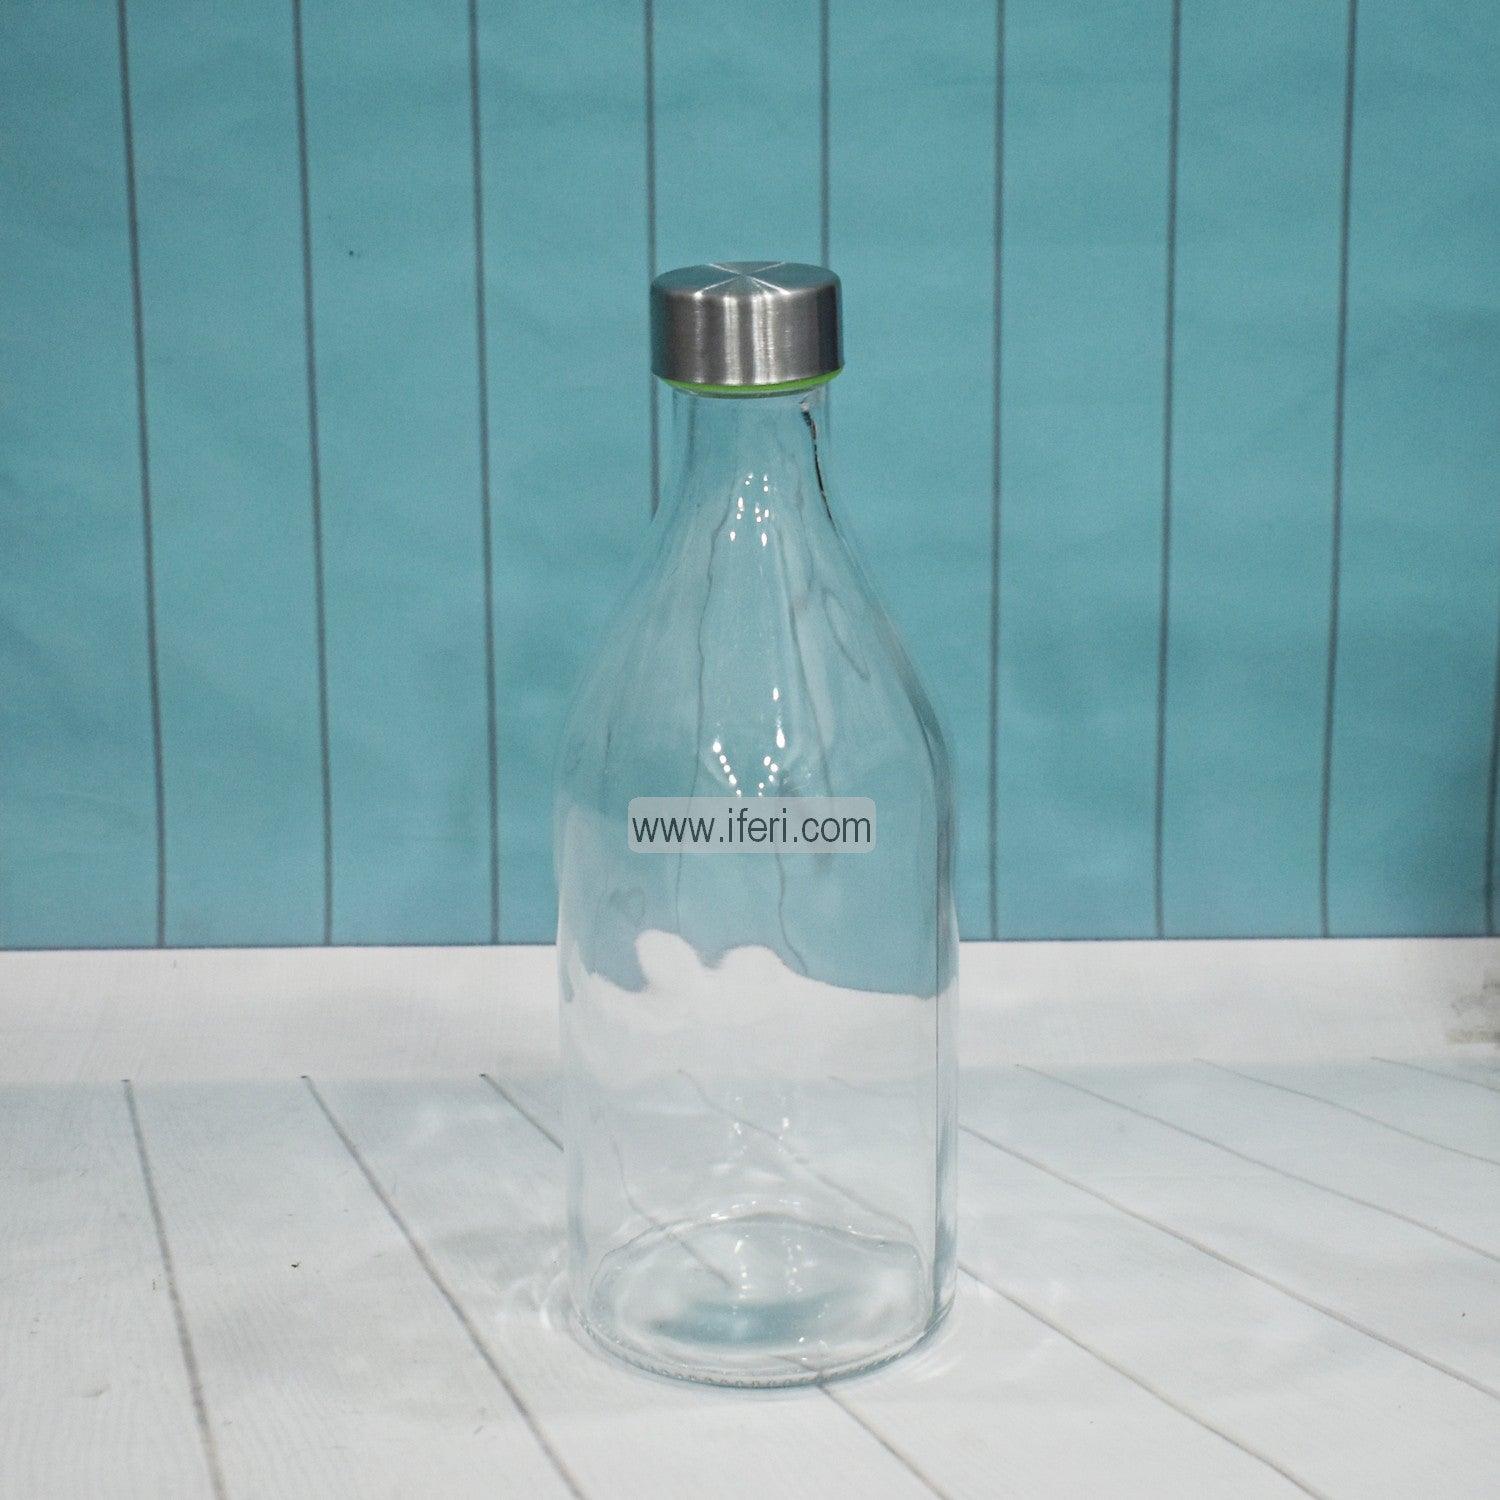 1 Liter Glass Water/Juice Bottle BS8183 Price in Bangladesh - iferi.com